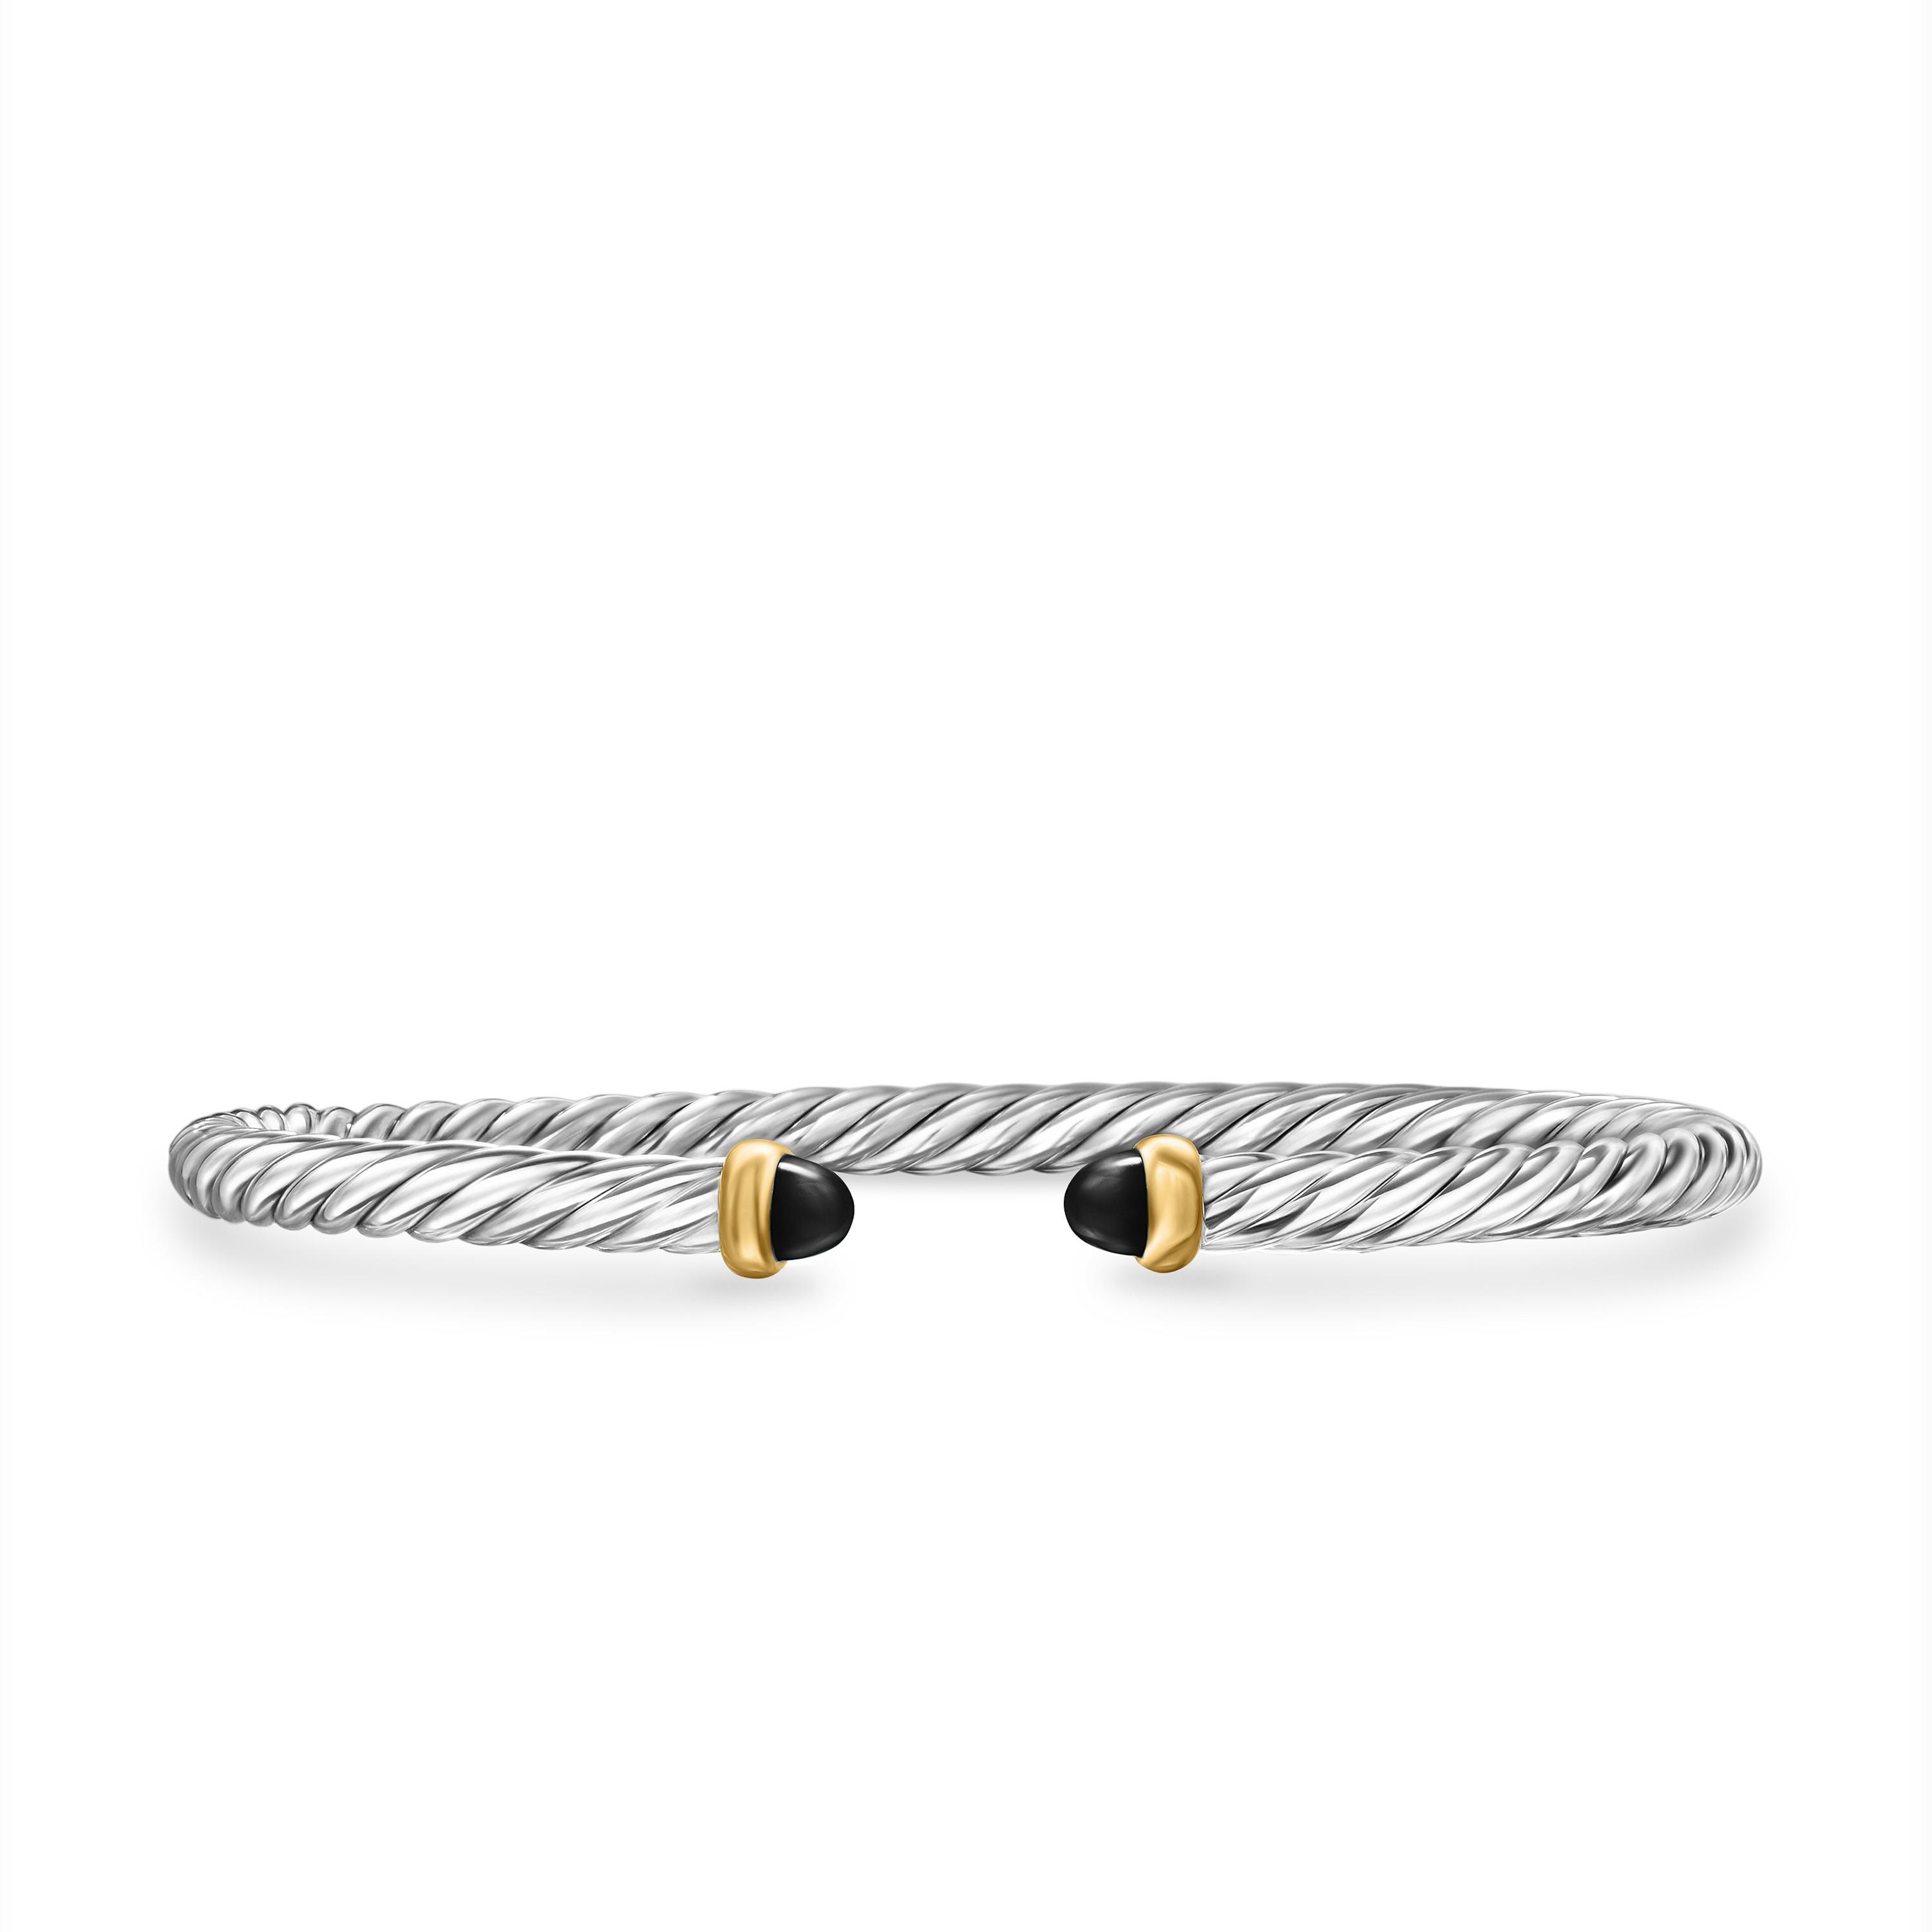 David Yurman Cable Flex Sterling Silver Bracelet with Black Onyx, Size Small